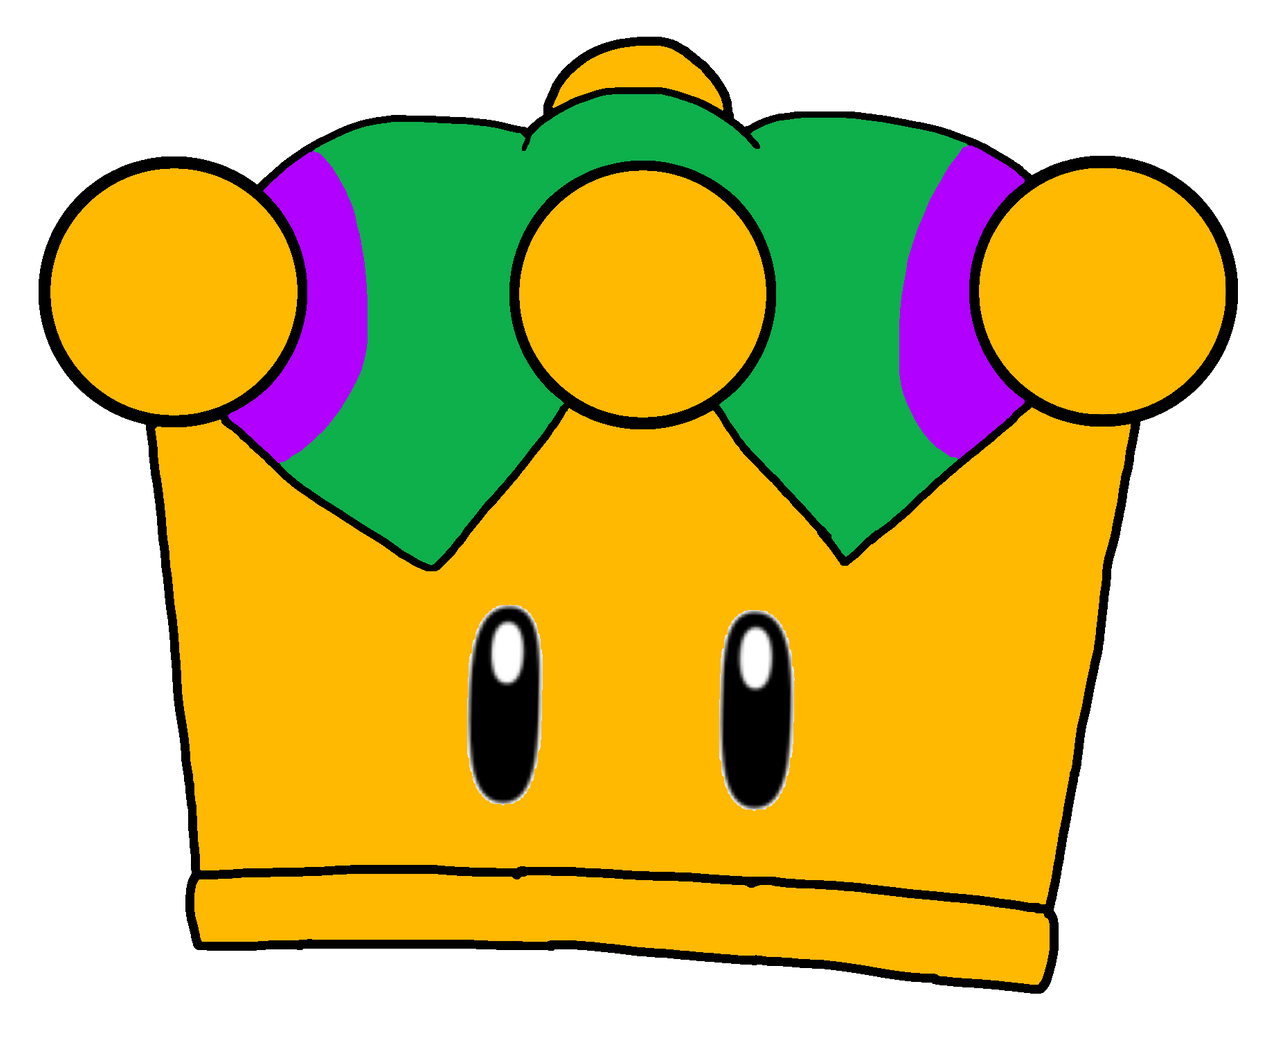 Super Mario: Super Crown (Greenette) 2D by Joshuat1306 on DeviantArt